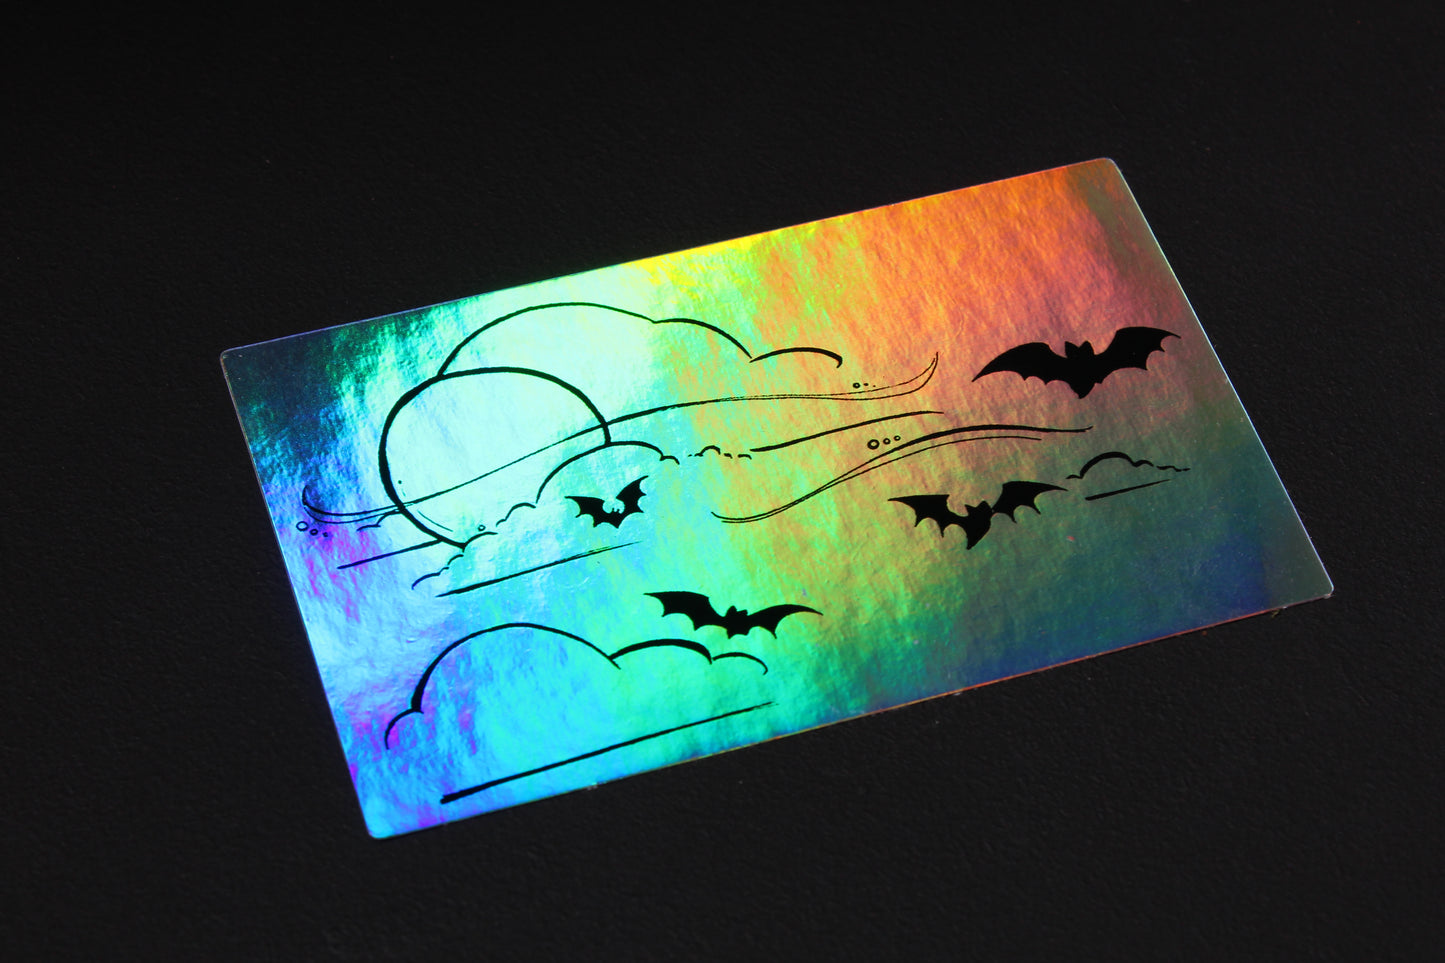 Holographic Bats in flight 4" x 2.5" Vinyl Stickers